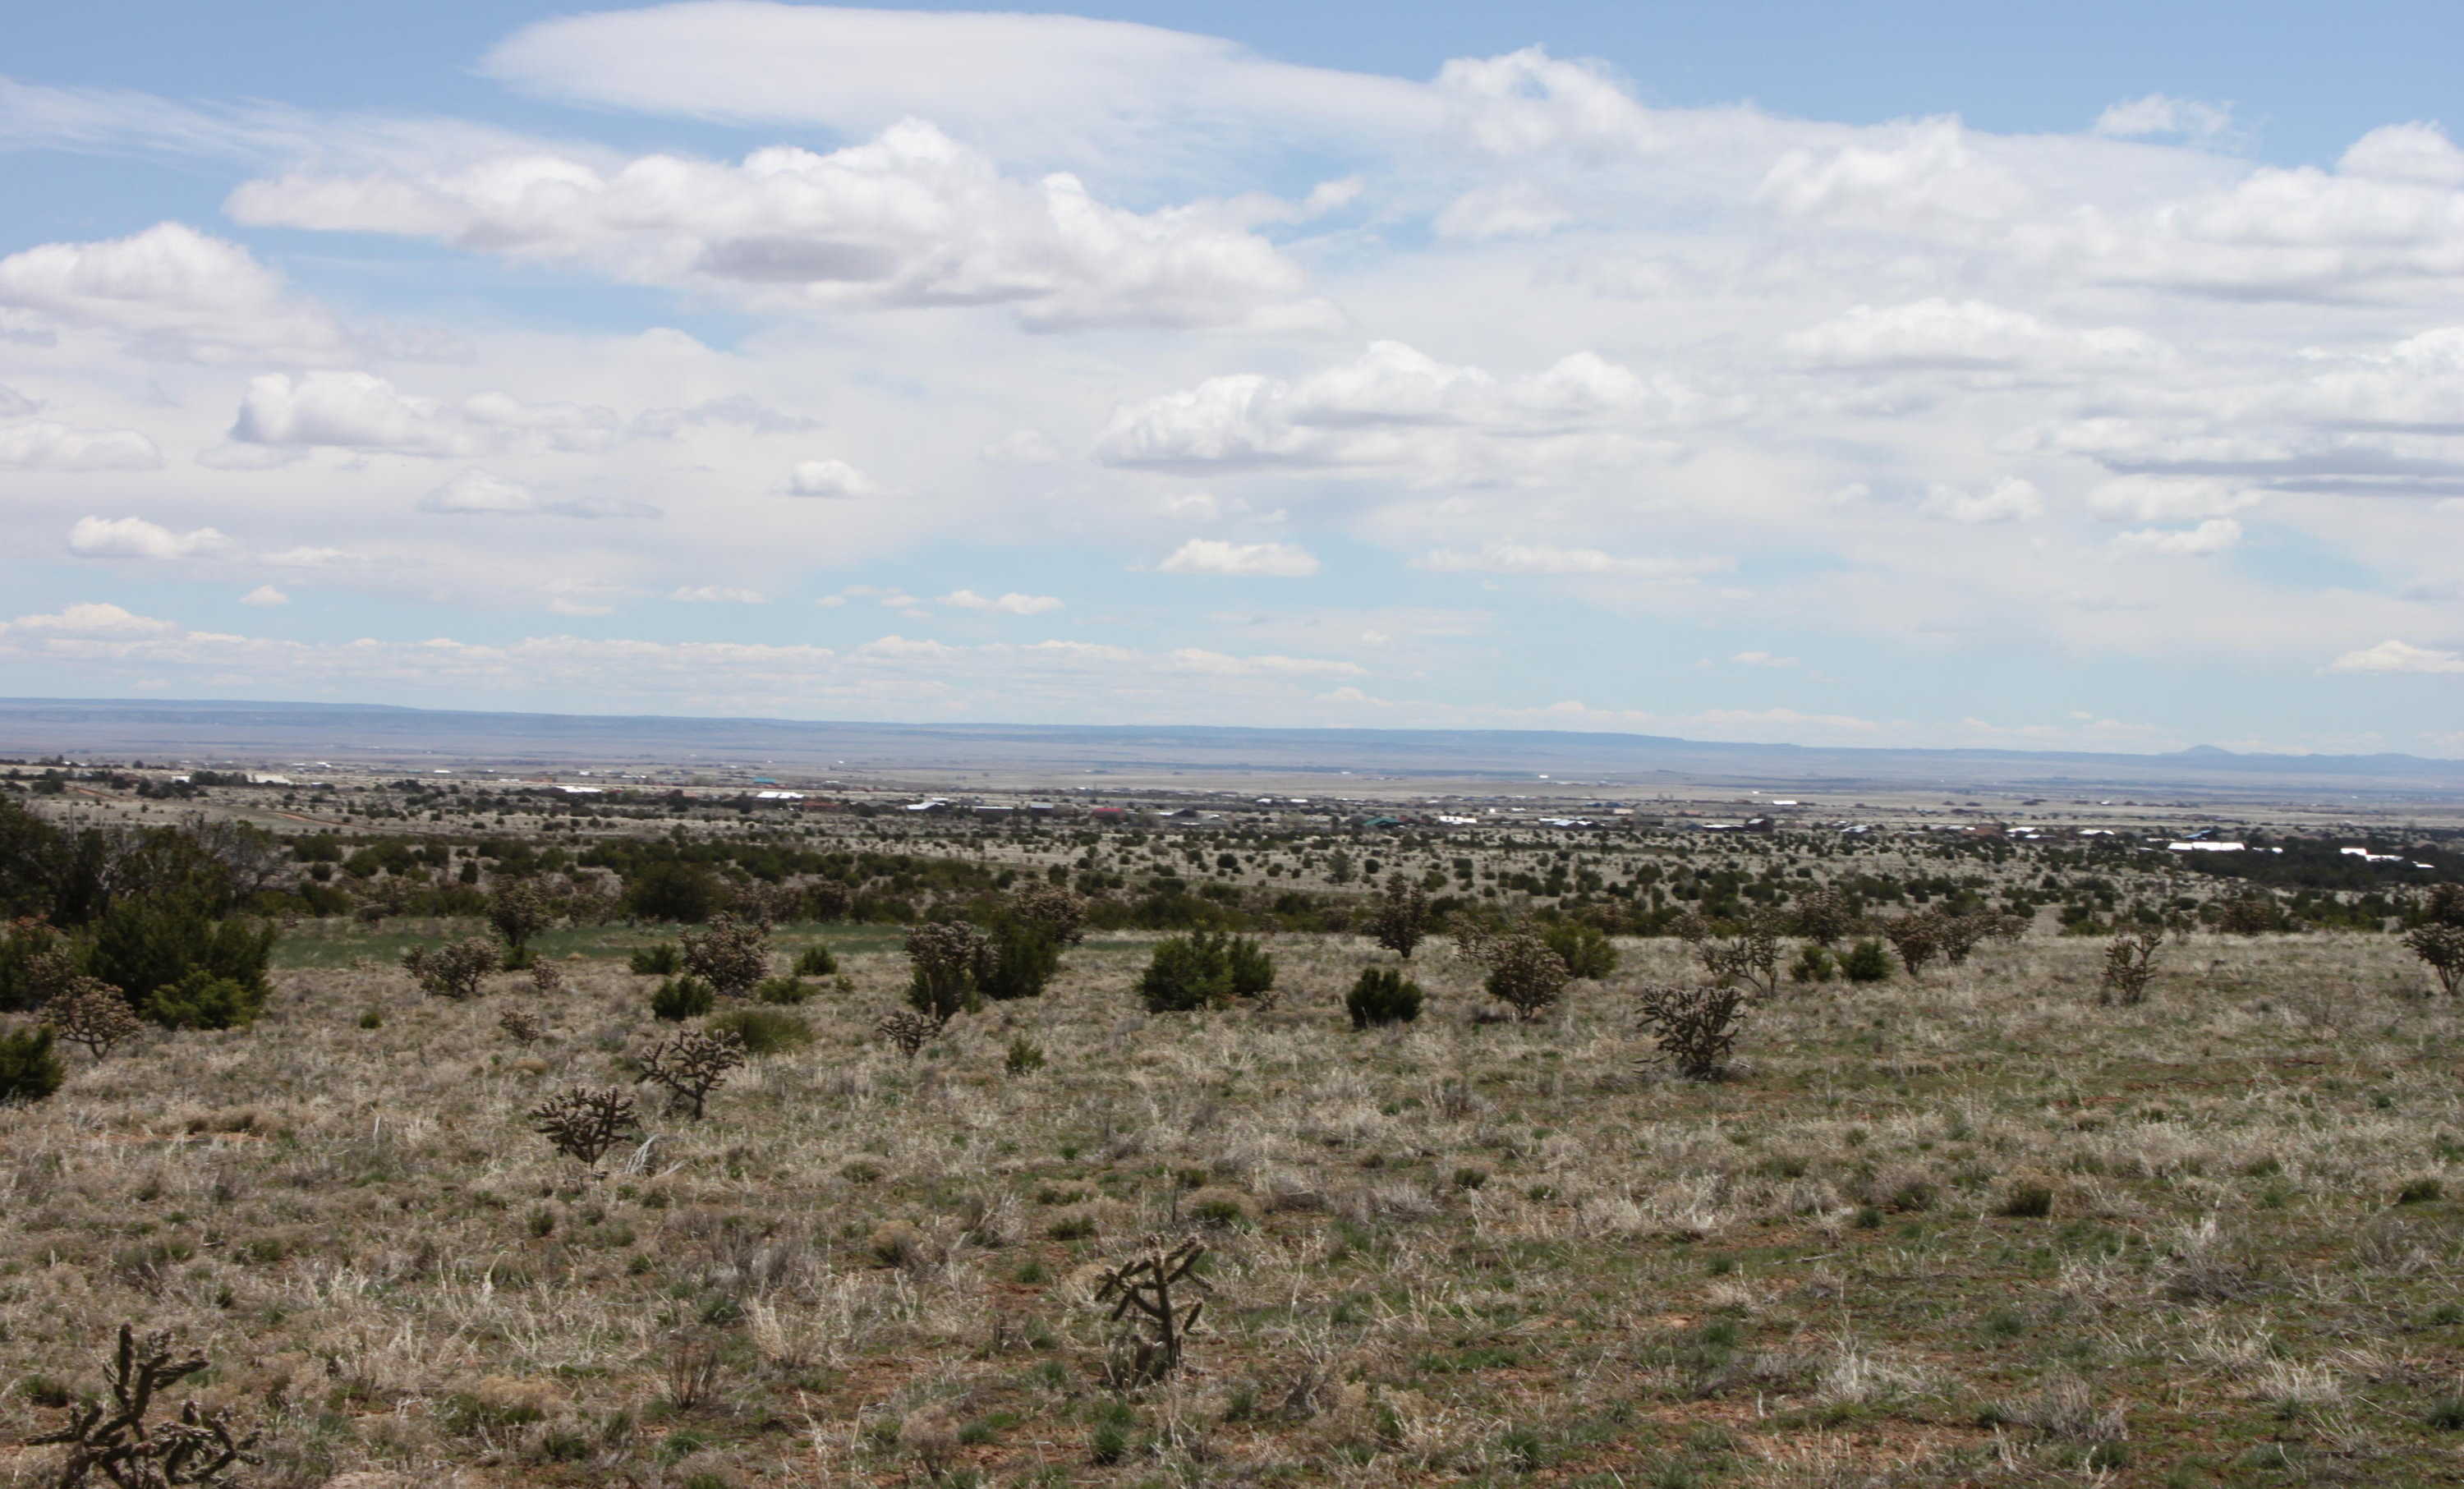 View Edgewood, NM 87015 land